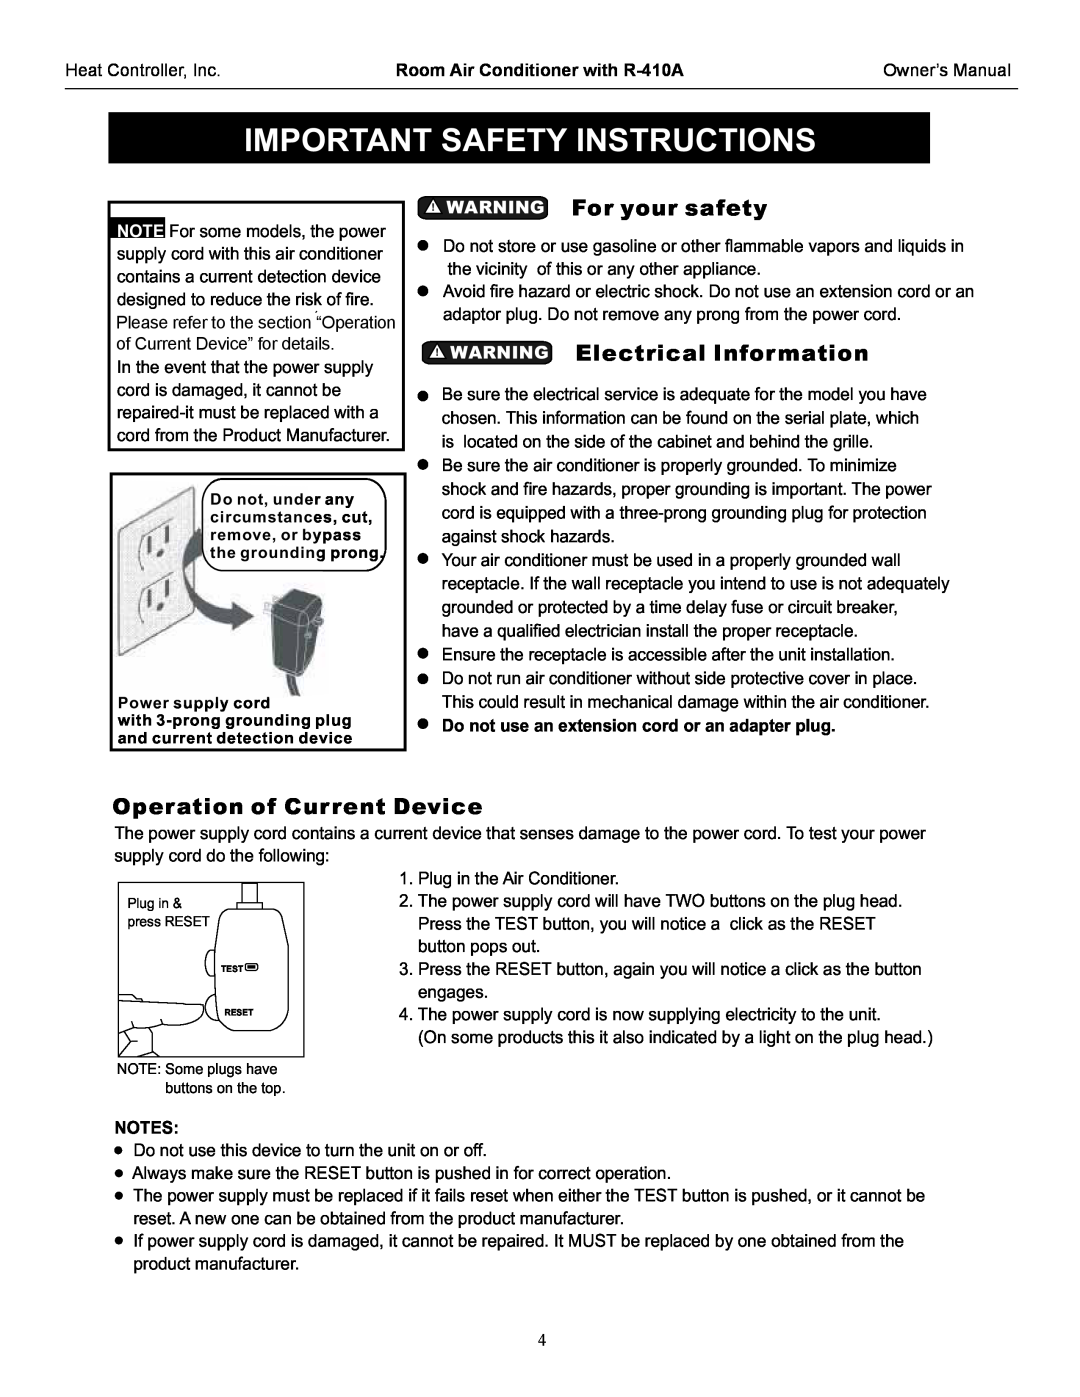 Heat Controller CD-121J manual Importantsafety Instructions, Donotuseanextensioncordoranadapterplug, WARNING Foryoursafety 